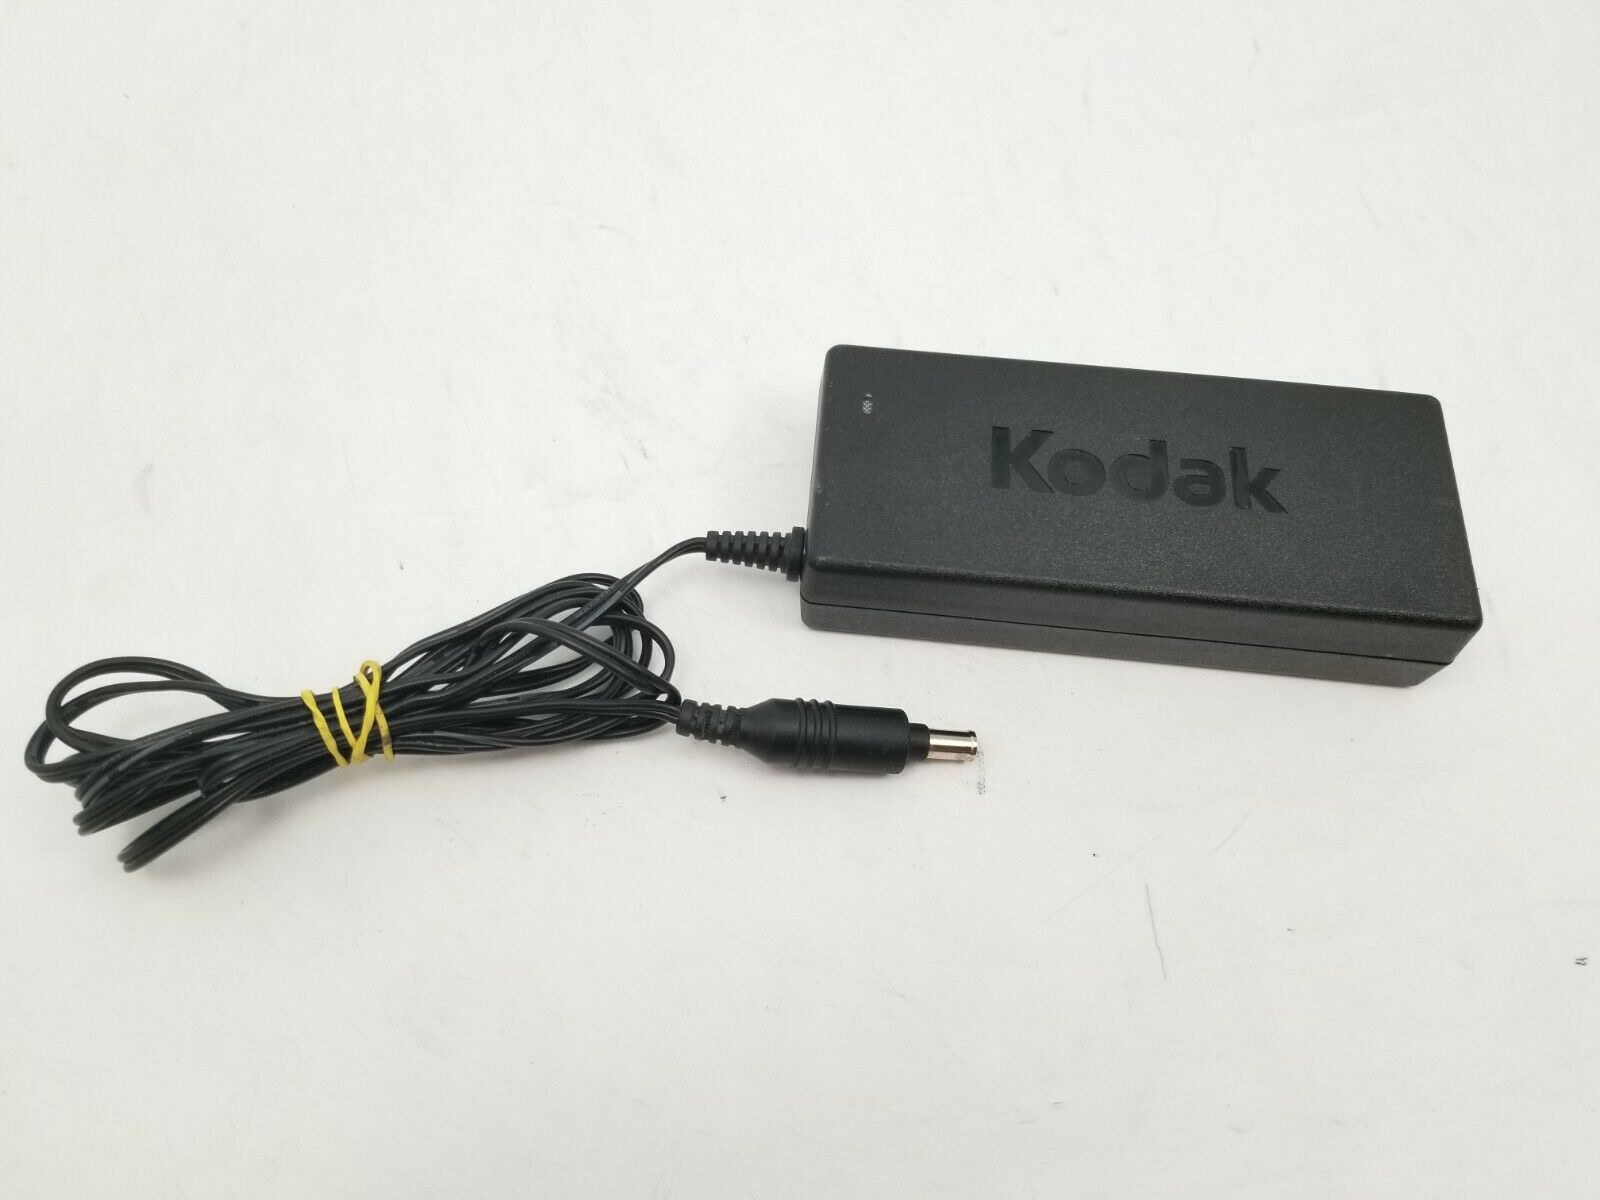 OEM AC Adapter Kodak 1K5667 1K2866 1K5862 Printer Battery Charger Power Supply Type: AC/DC Adapter Features: Powered